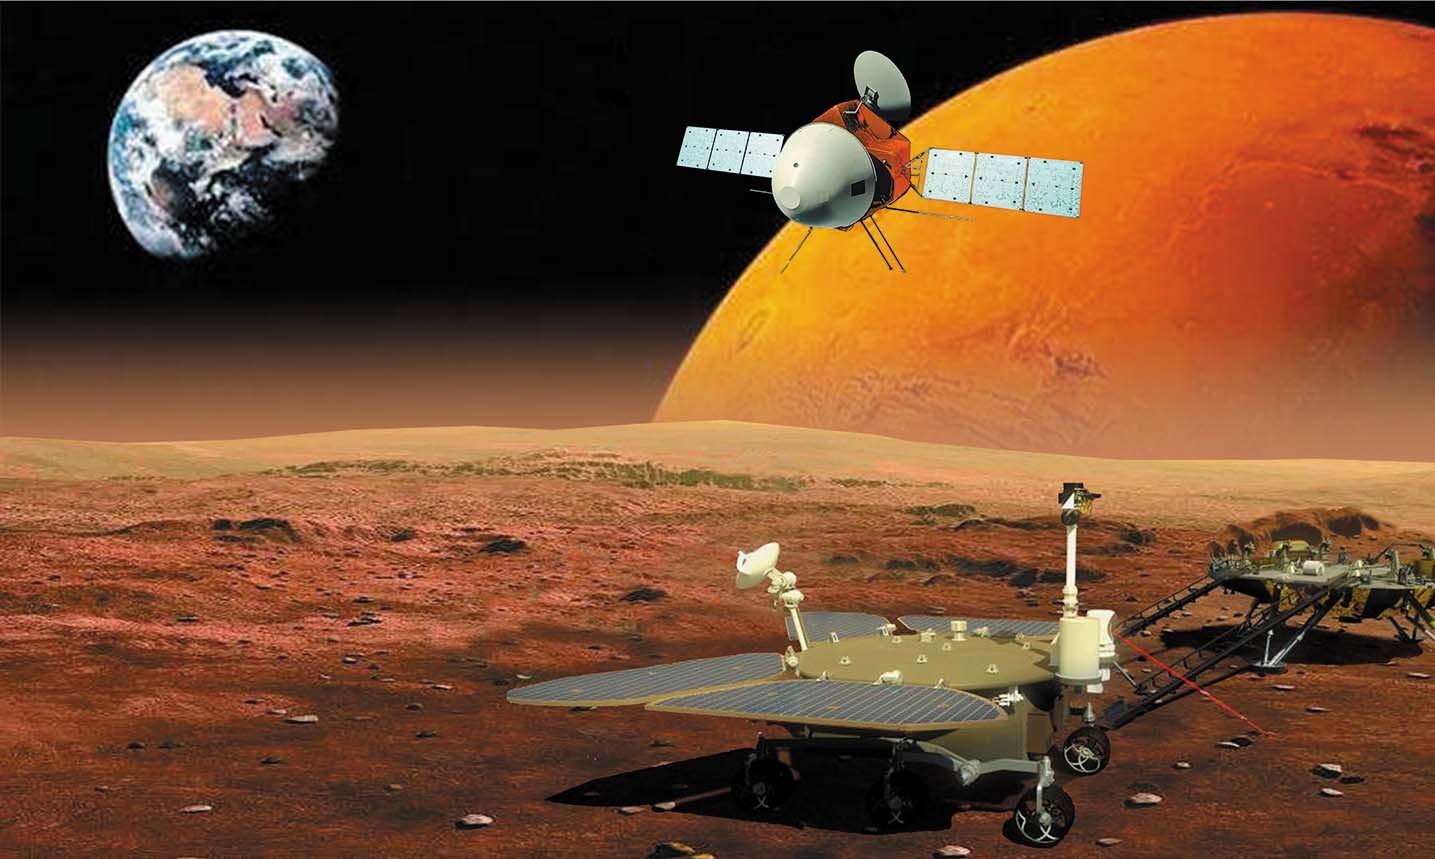 Tianwen-1 enters orbit around Mars - space

